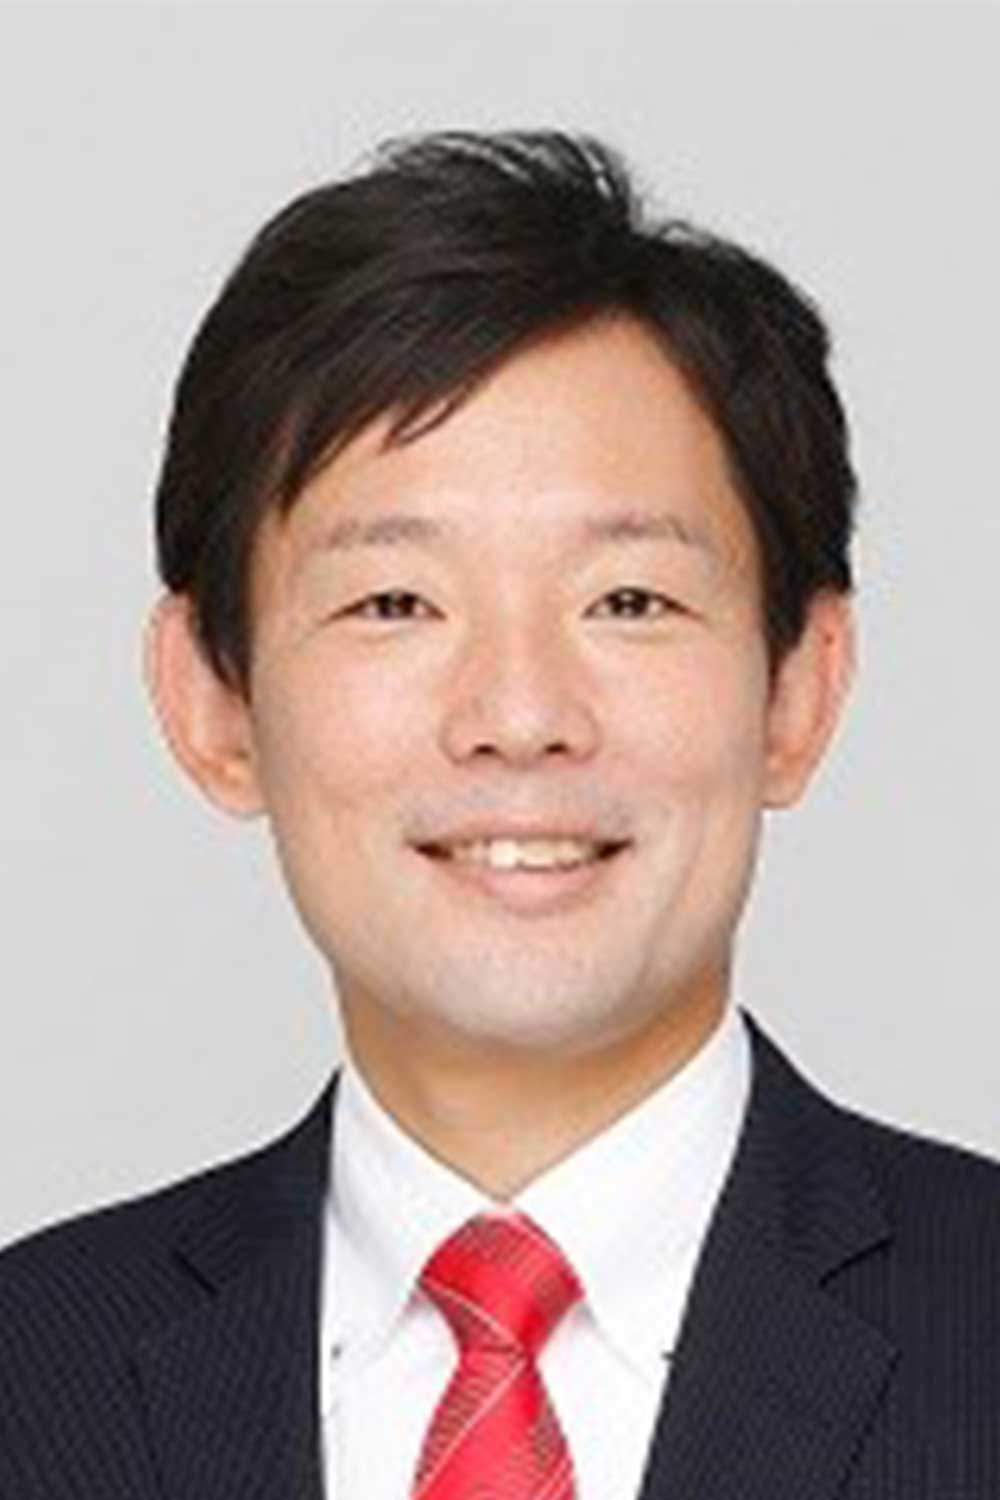 中村健 - Wikipedia